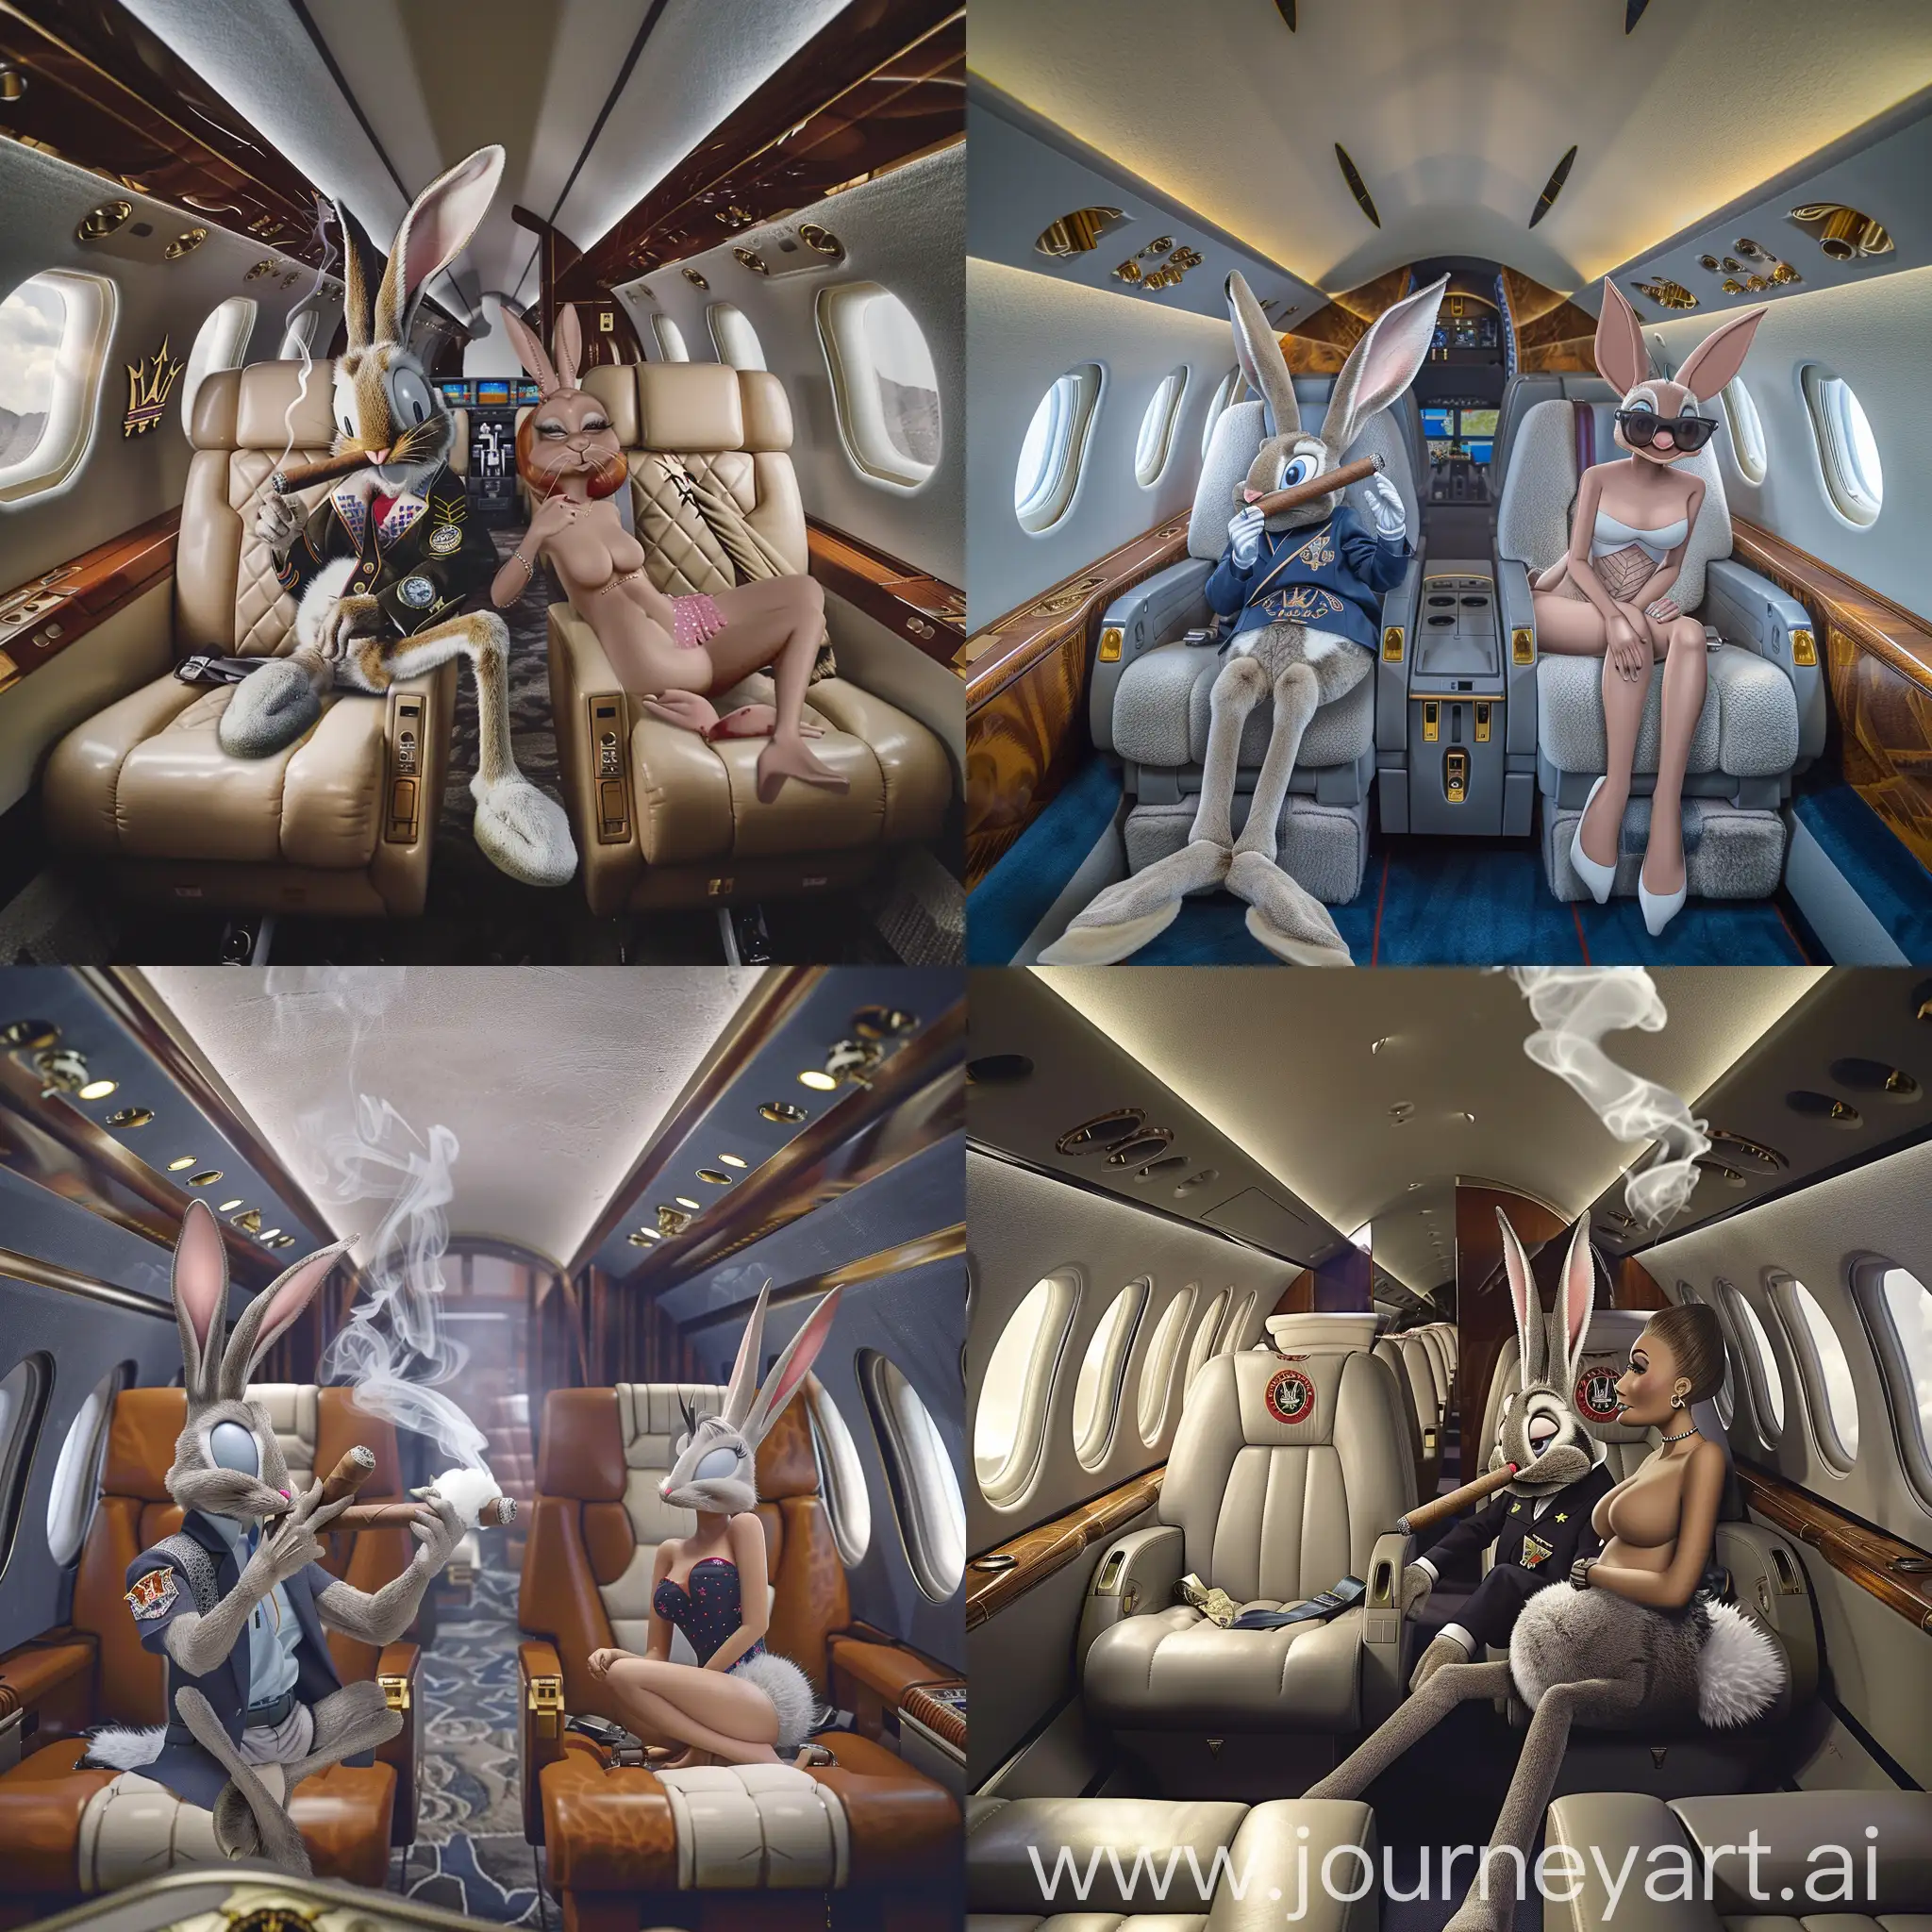 Luxury-Jet-Interior-with-Maserati-Design-and-Cartoon-Pilots